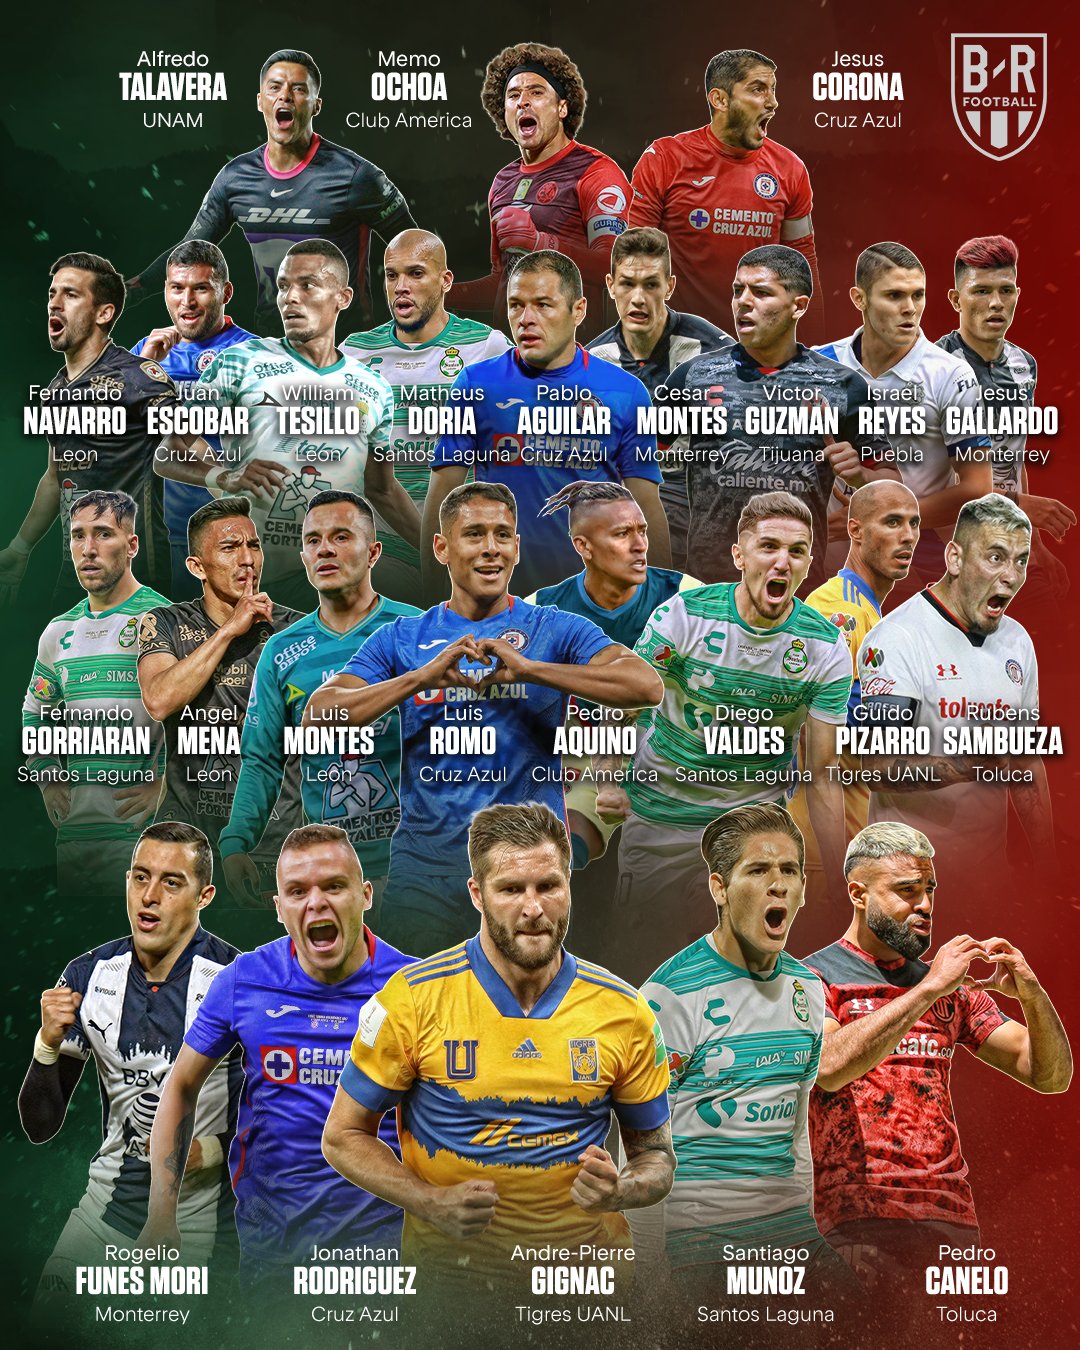 B/R Football on Twitter "The Liga MX AllStar roster that will face